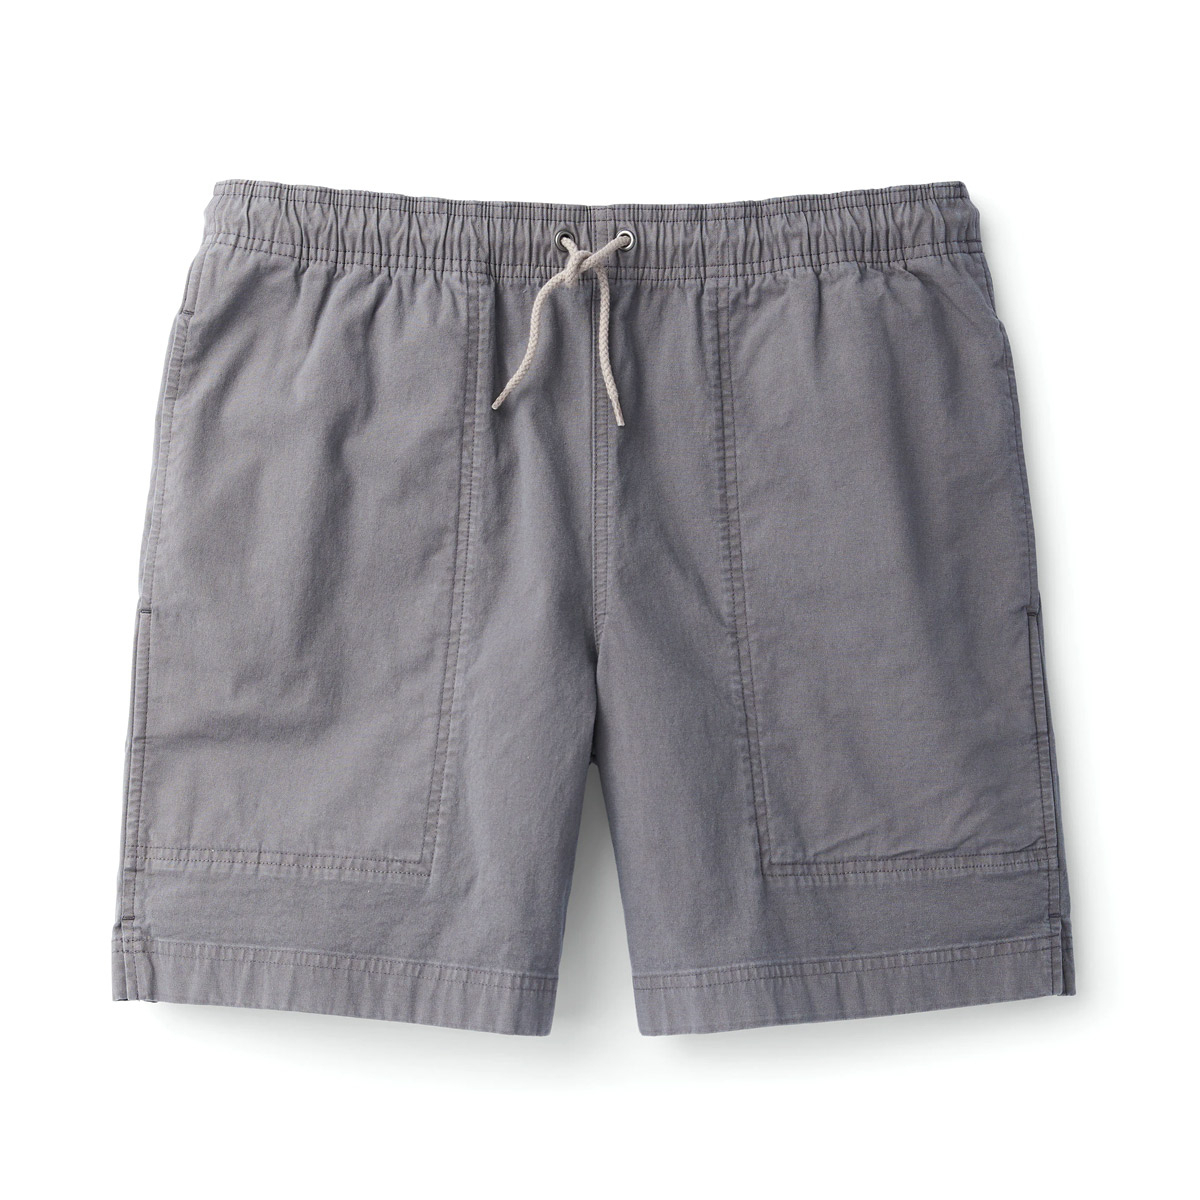 Filson Dry Falls Shorts Charcoal Gray